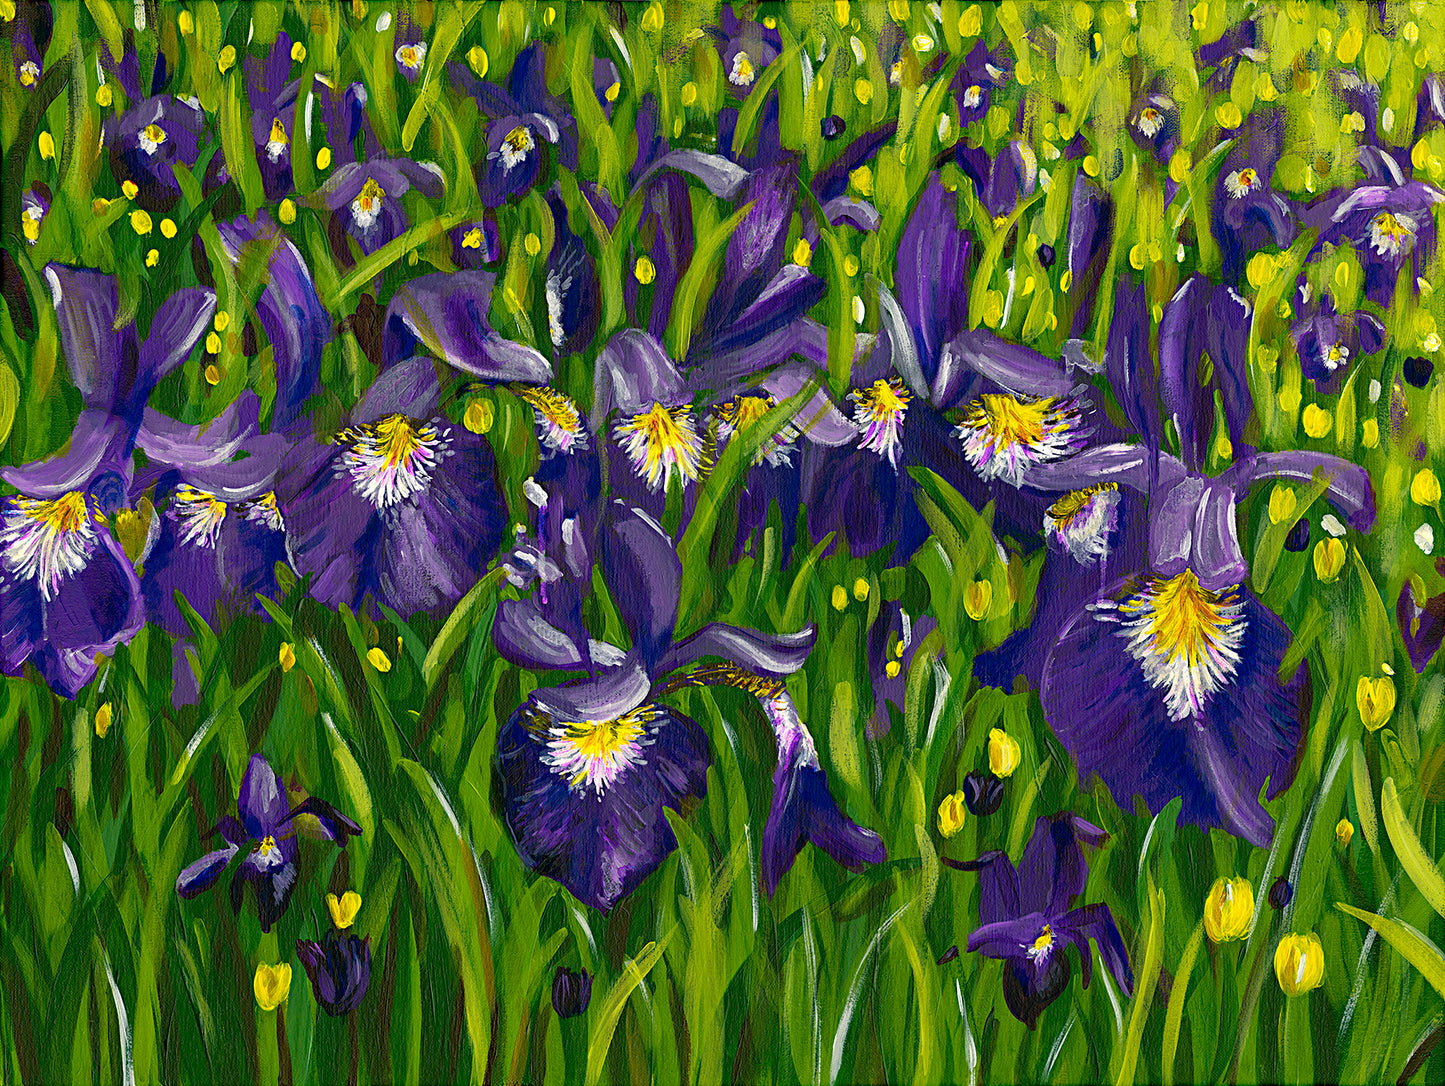 Large Acrylic Painting Iris Field Landscape, floral, flowers,abstract art, purple, green, yellow, white paint, judy century, original canvas painting fine art print, deep edge